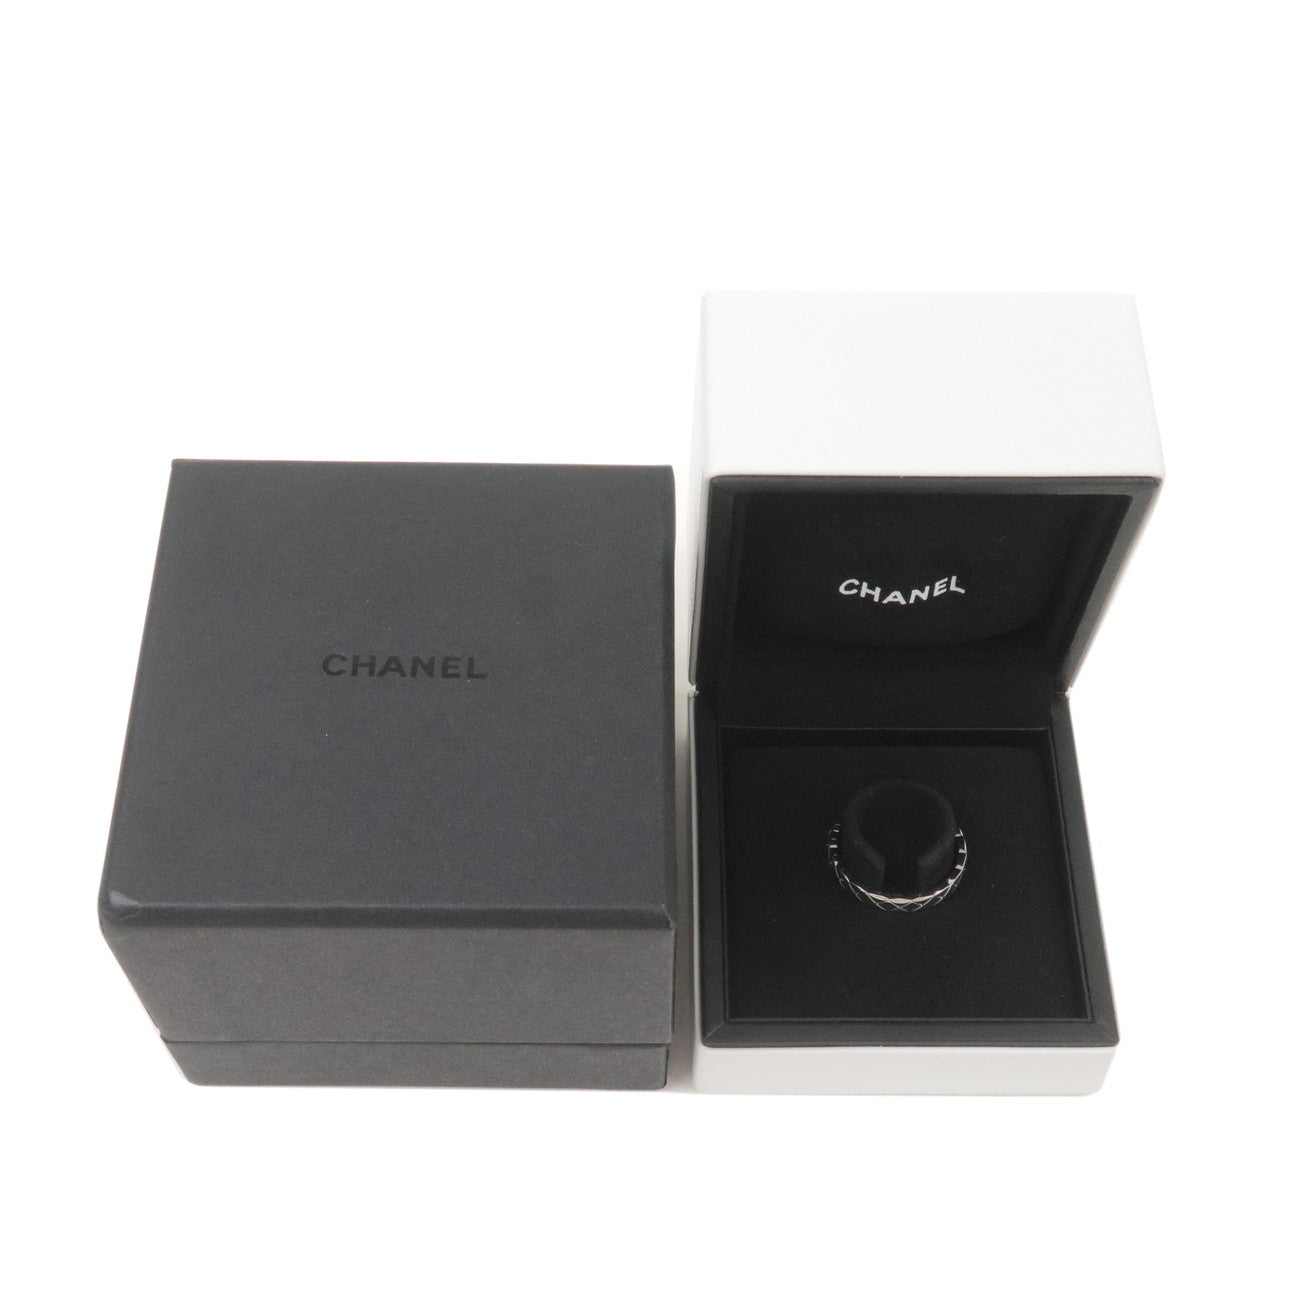 CHANEL Coco Crush Mini Ring K18WG 750WG White Gold #57 US8 EU57